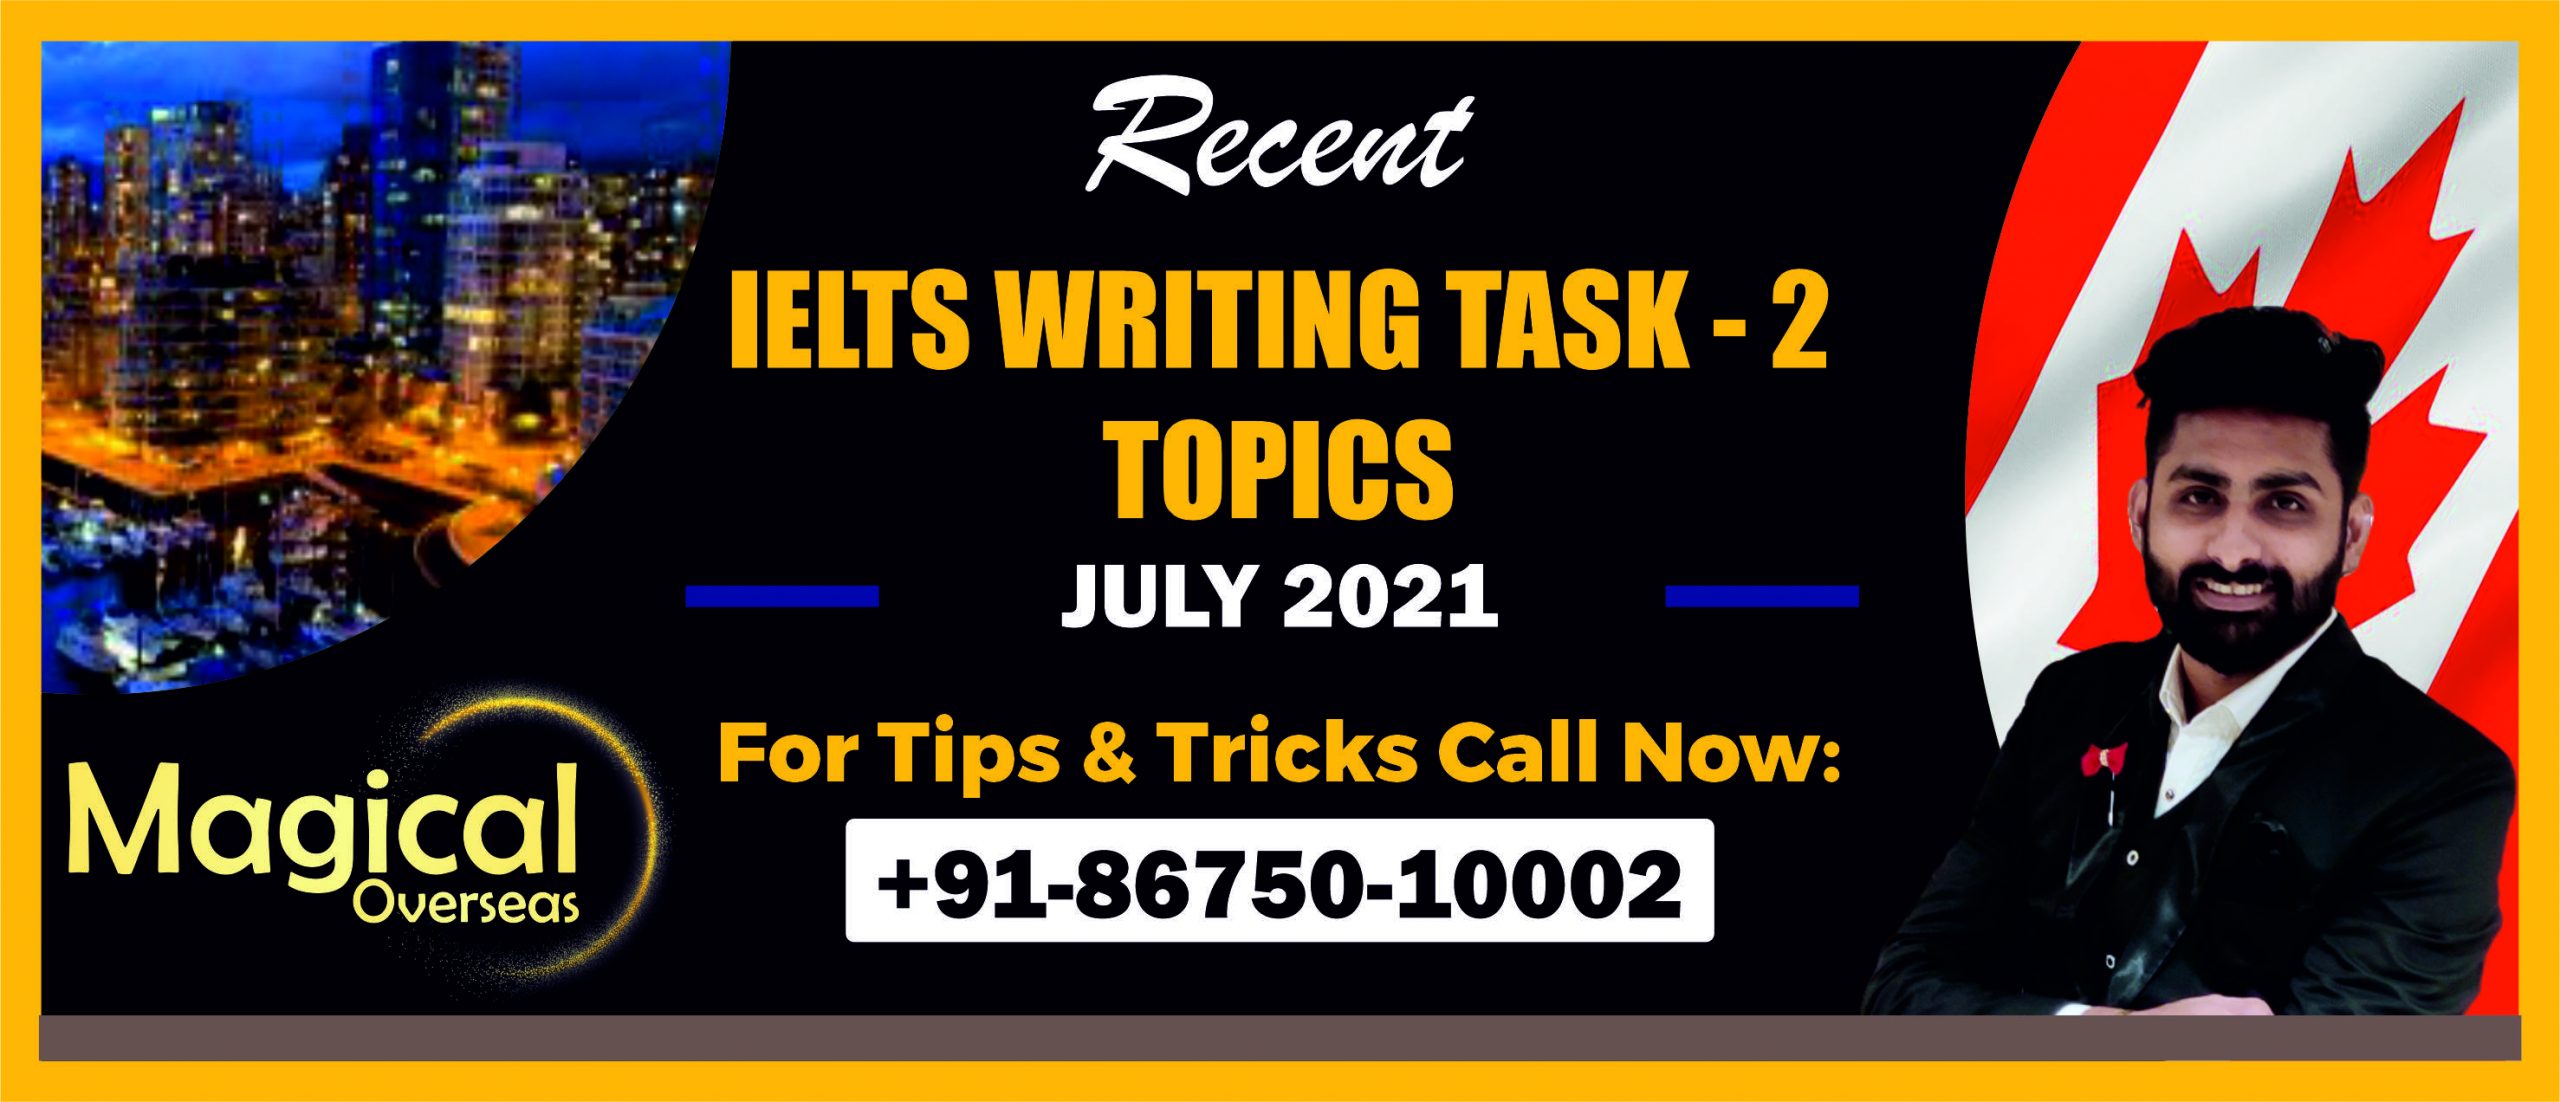 Writing Task 2 Topics July 2021